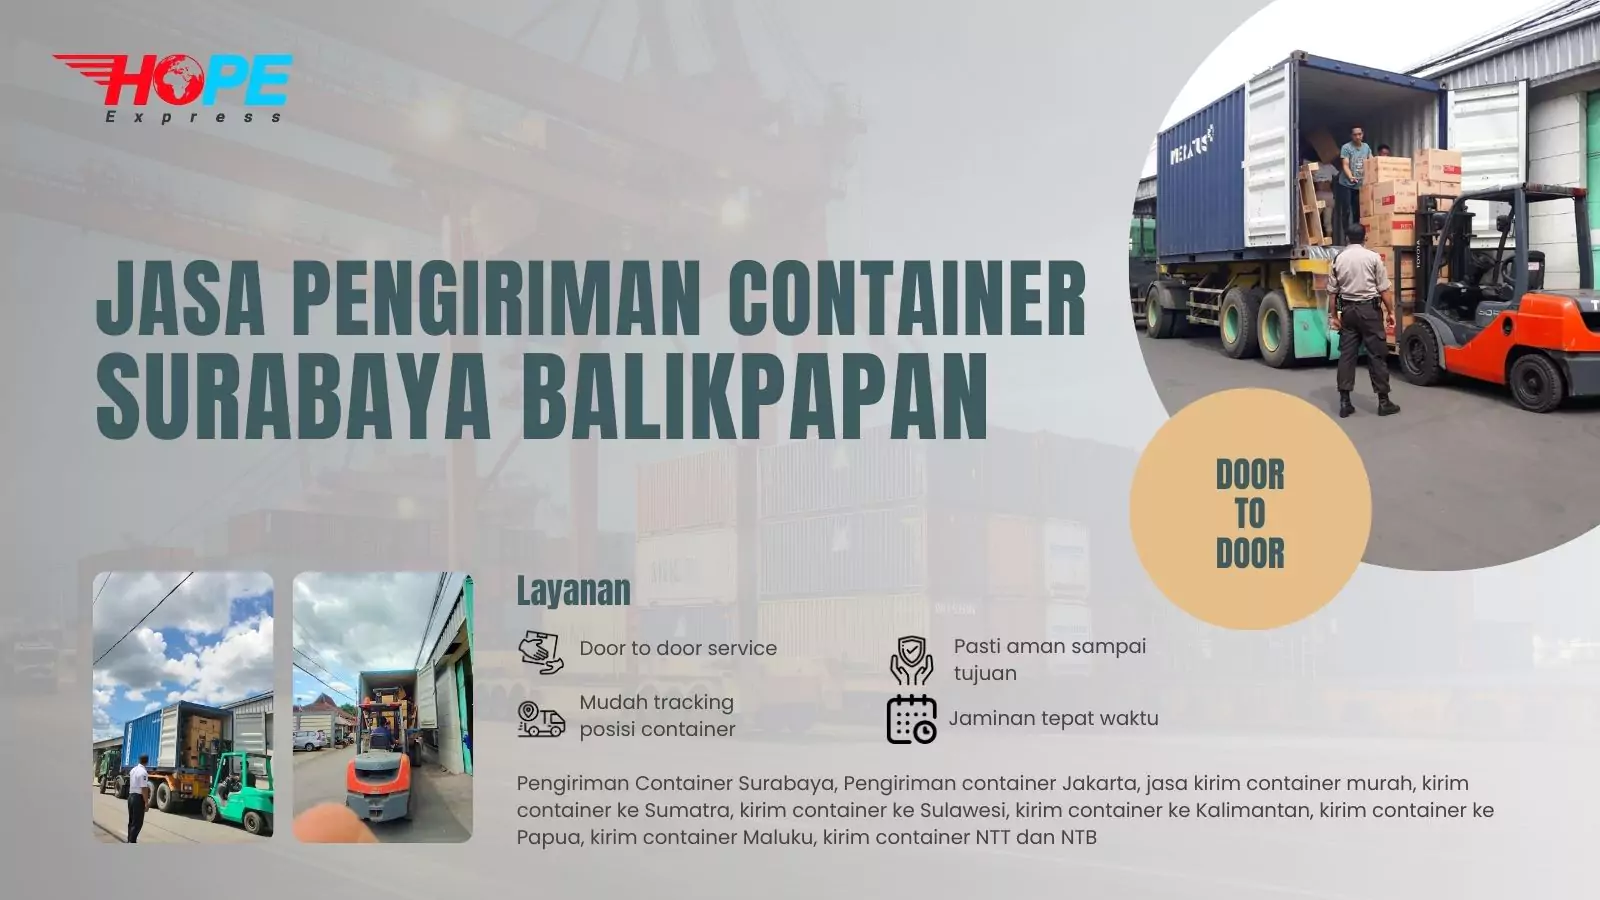 Jasa Pengiriman Container Surabaya Balikpapan